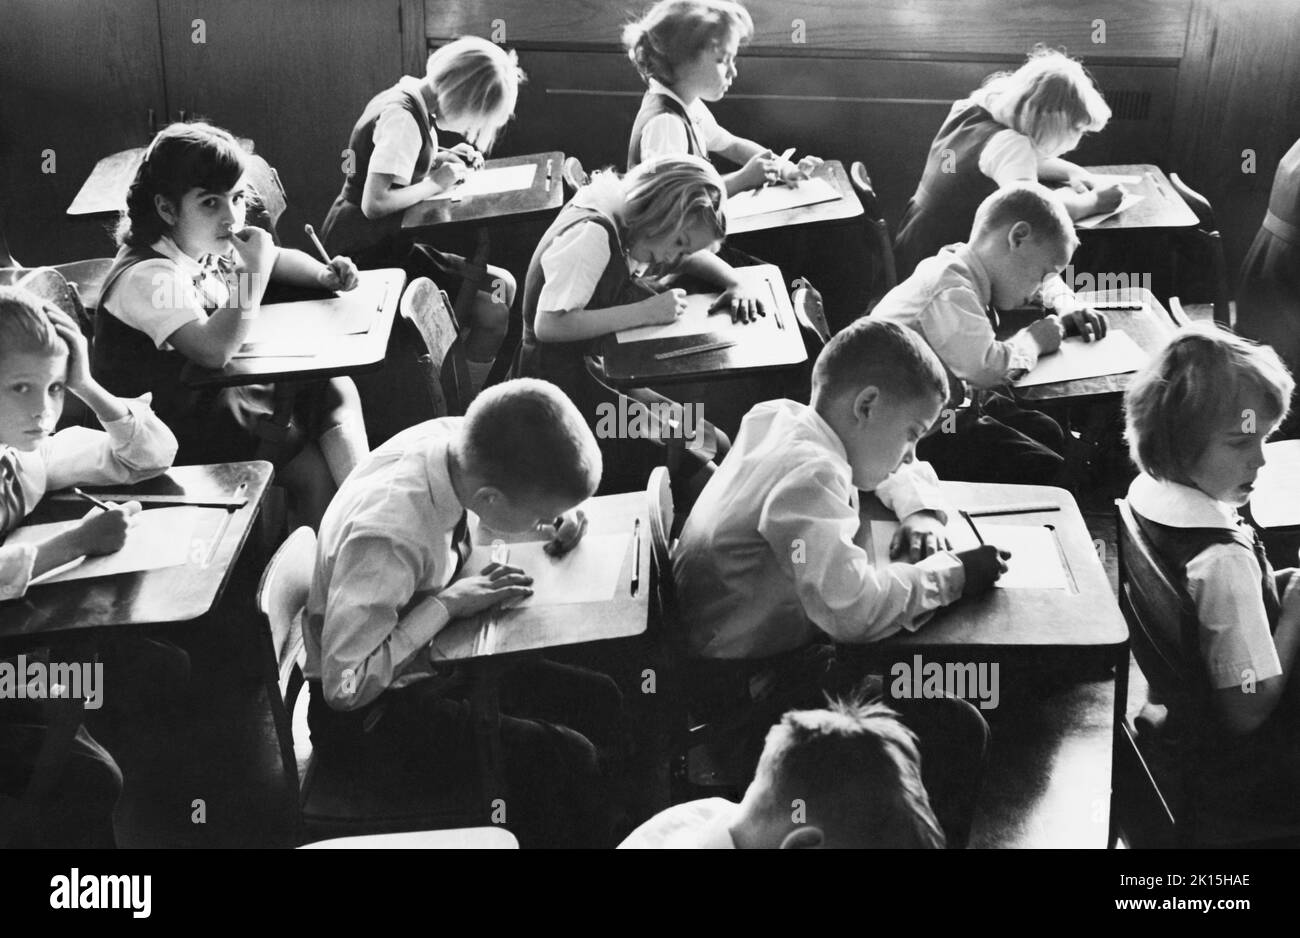 Parochial school children take a test. Washington, D.C. Circa 1950's, 1960's. Stock Photo